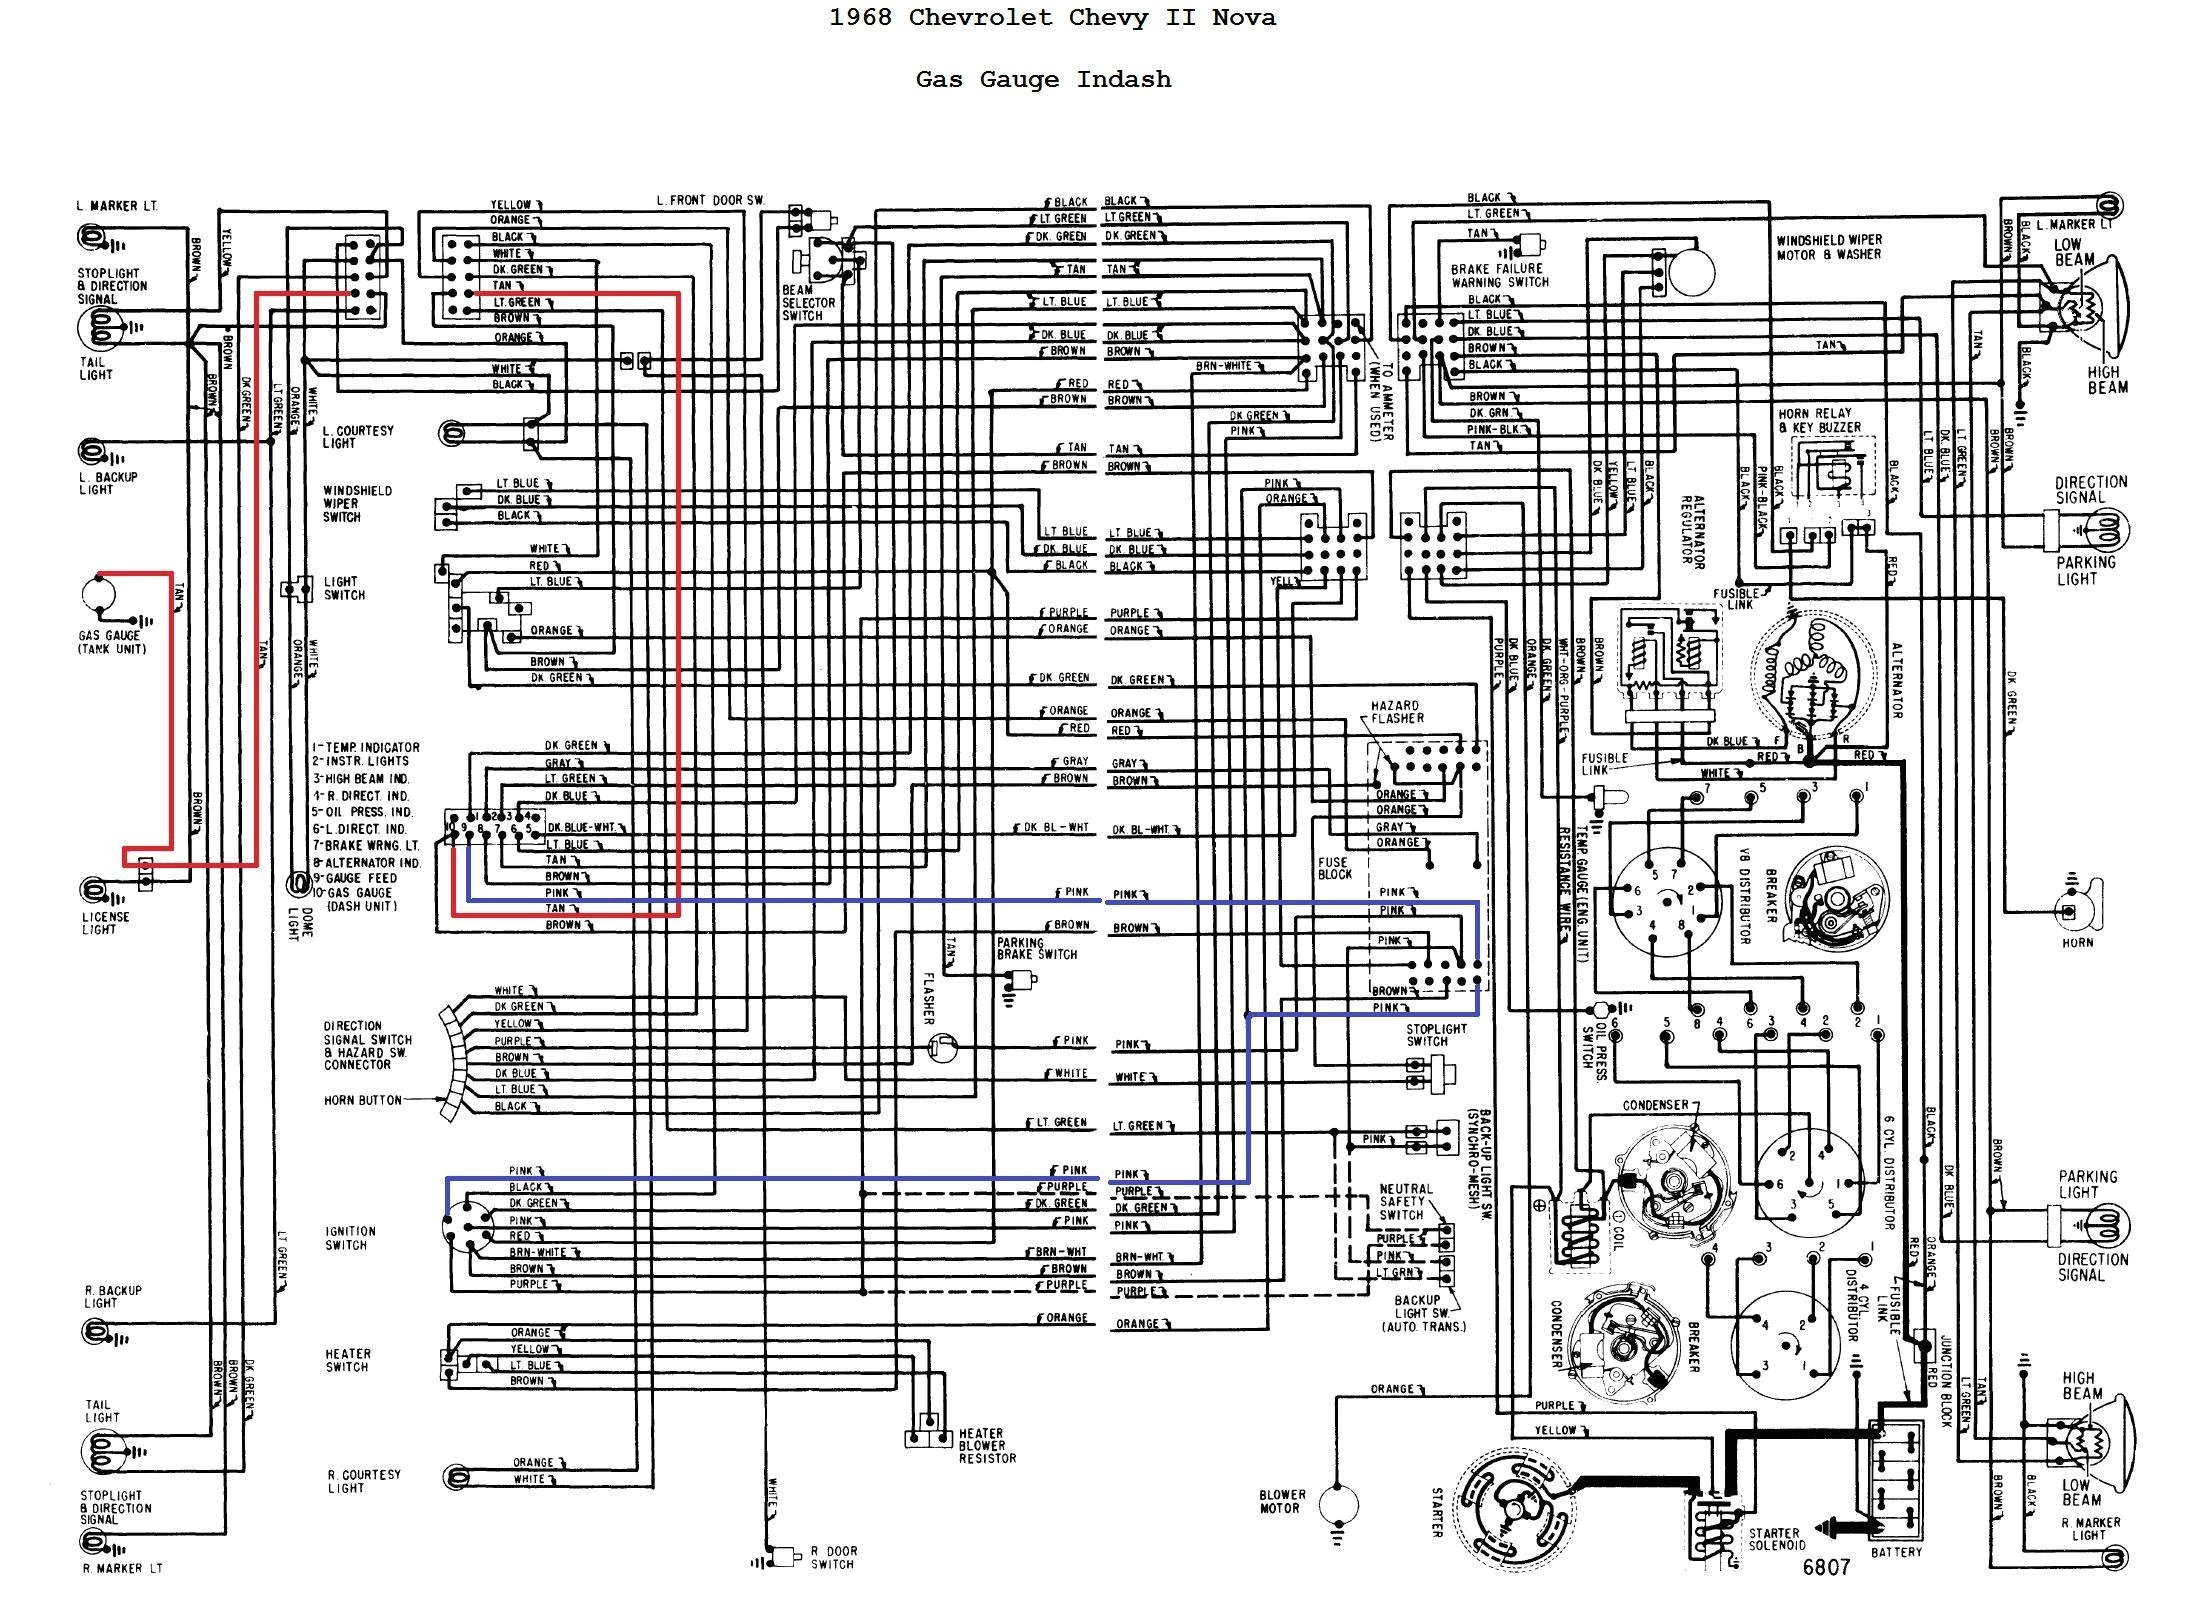 68 camaro tach wiring wiring diagram row 1968 camaro tachometer wiring wiring diagrams konsult 68 camaro